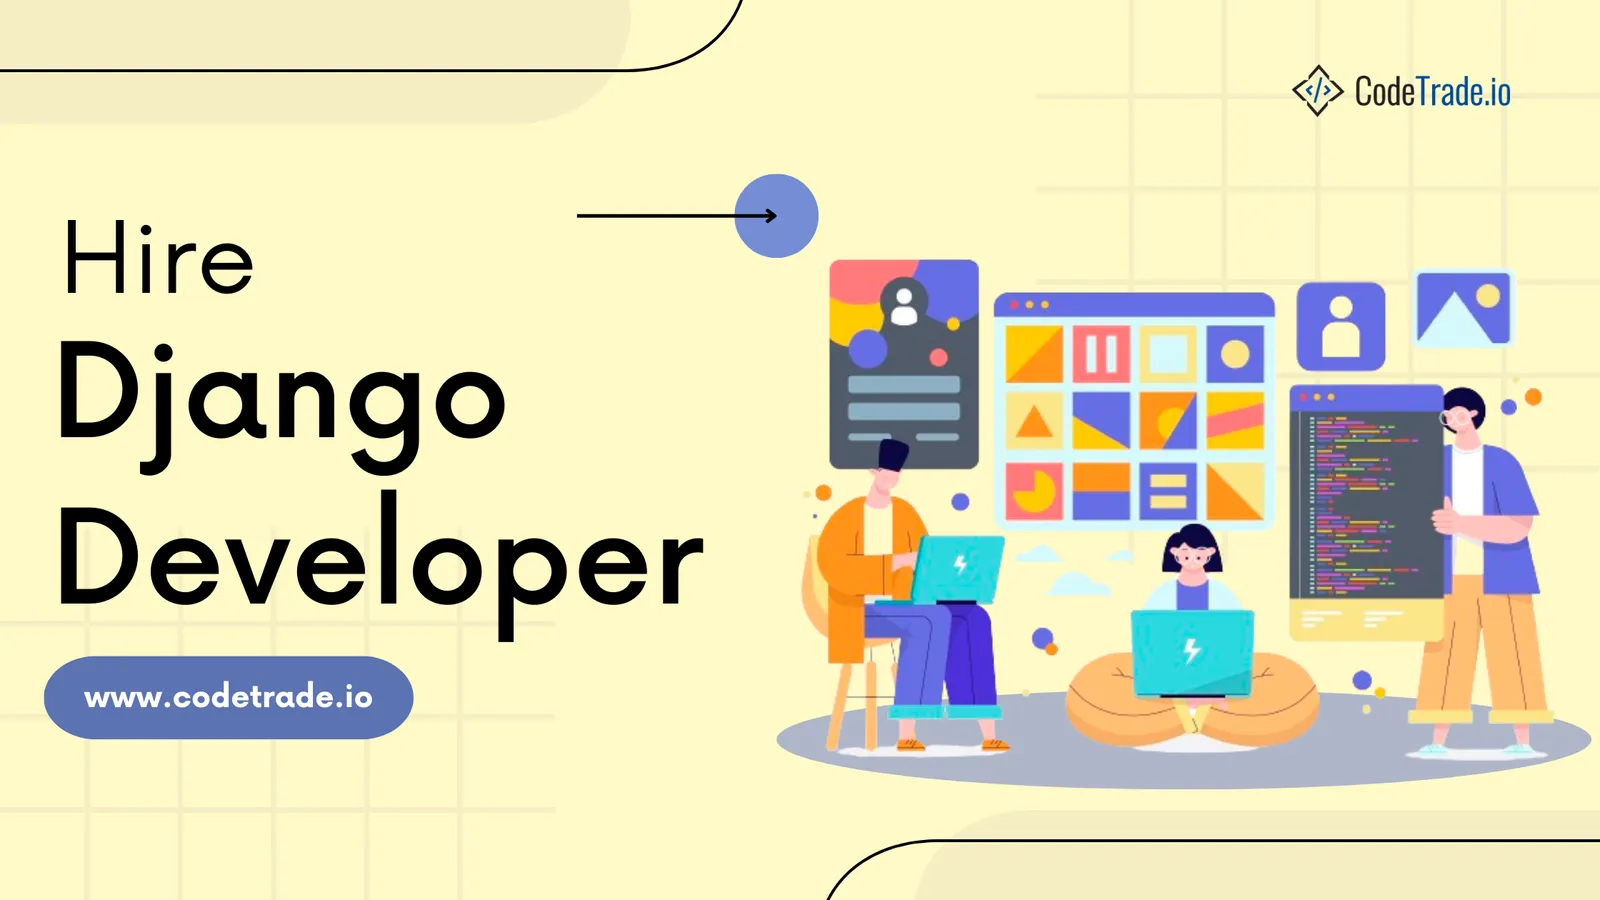 Hire Expert Django Developers on CodeTrade - Your Gateway to Efficient Web Development